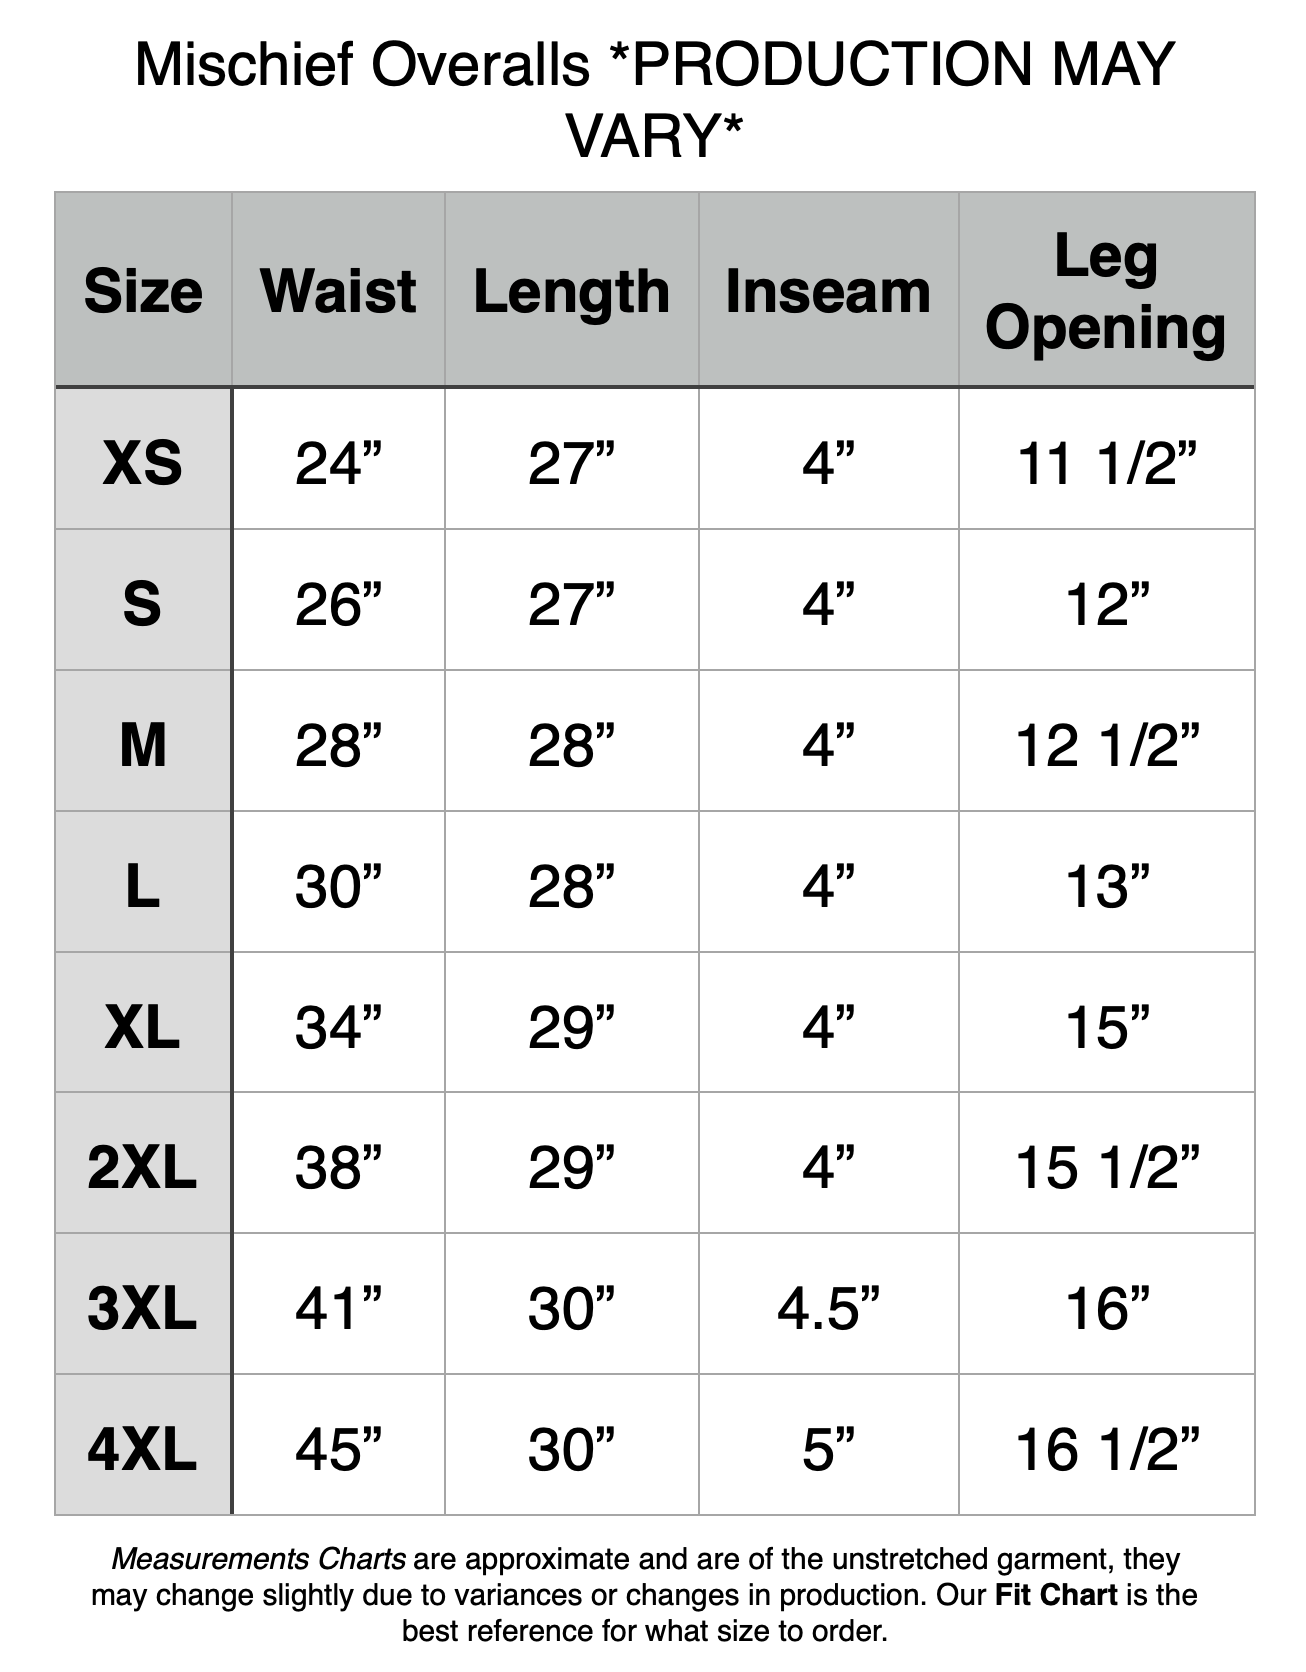 Mischief Overalls - XS: 24" Waist, 27" Length, 4" Inseam, 11.5" Leg Opening. S: 26" Waist, 27" Length, 4" Inseam, 12" Leg Opening. M: 28" Waist, 28" Length, 4" Inseam, 12.5" Leg Opening. L: 30" Waist, 28" Length, 4" Inseam, 13" Leg Opening. XL: 34" Waist, 29" Length, 4" Inseam, 15" Leg Opening. 2XL: 38" Waist, 29" Length, 4" Inseam, 15.5" Leg Opening. 3XL: 41" Waist, 30" Length, 4.5" Inseam, 16" Leg Opening. 4XL: 45" Waist, 30" Length, 5" Inseam, 16.5" Leg Opening.